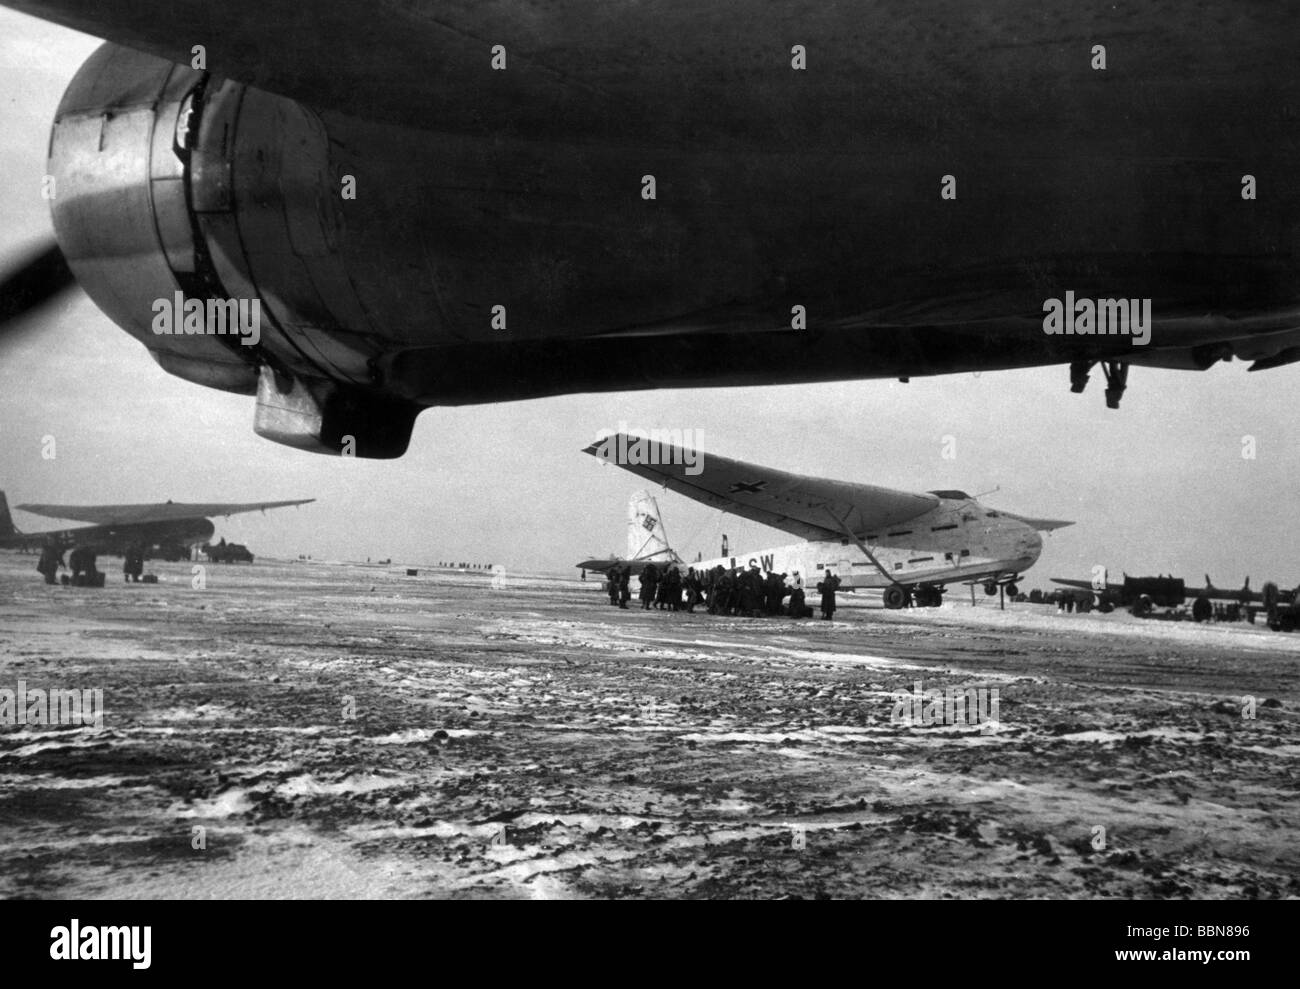 Eventi, Seconda guerra mondiale / seconda guerra mondiale, Russia, guerra aerea, aliante del carico tedesco Messerschmitt Me 321 'Gigant' (gigante), Kerch, Ucraina, 6.2.1943, Foto Stock